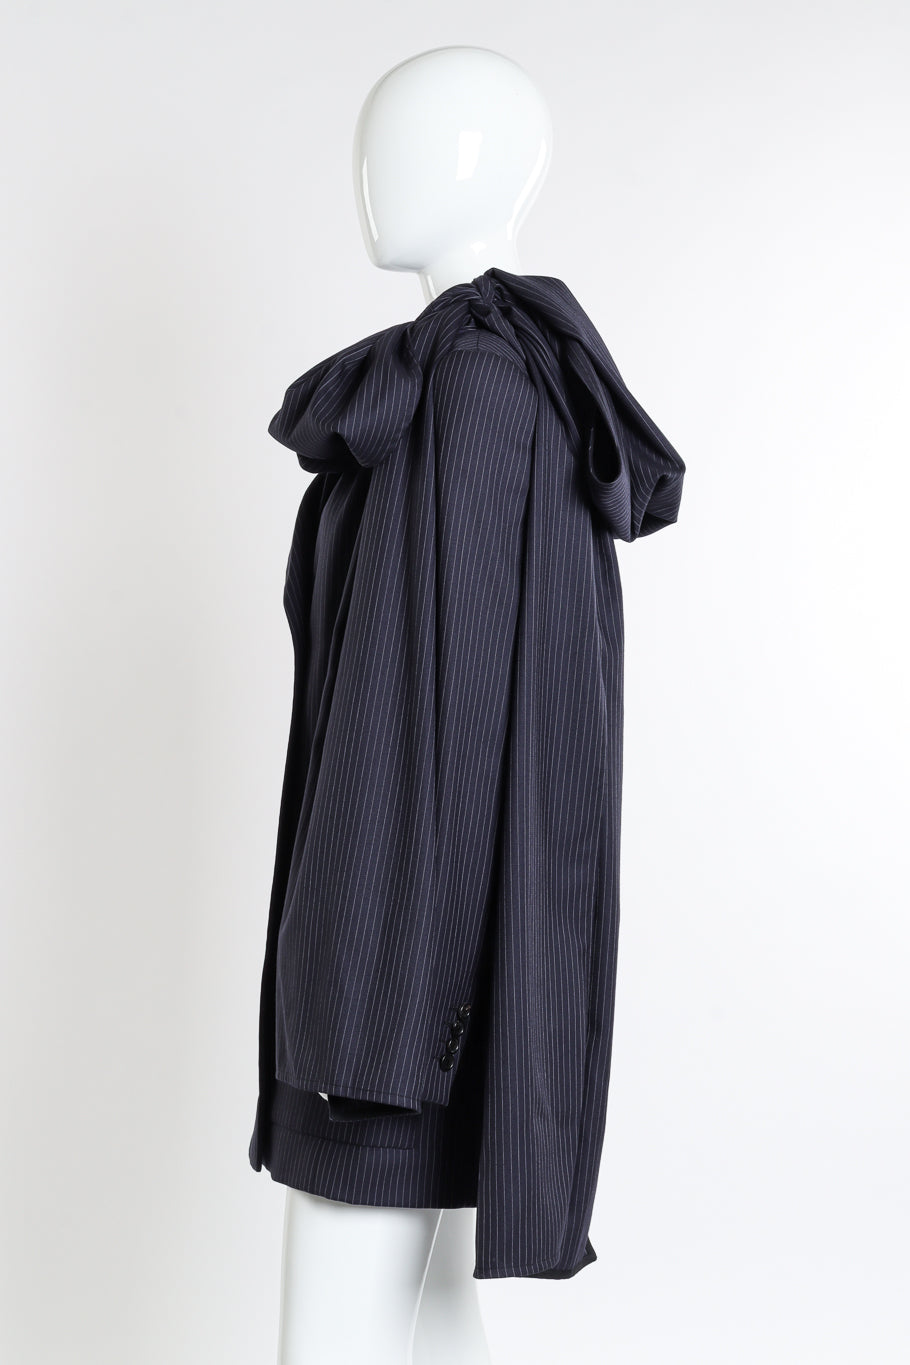 Nina Ricci Pinstripe Bow Jacket side on mannequin @recessla